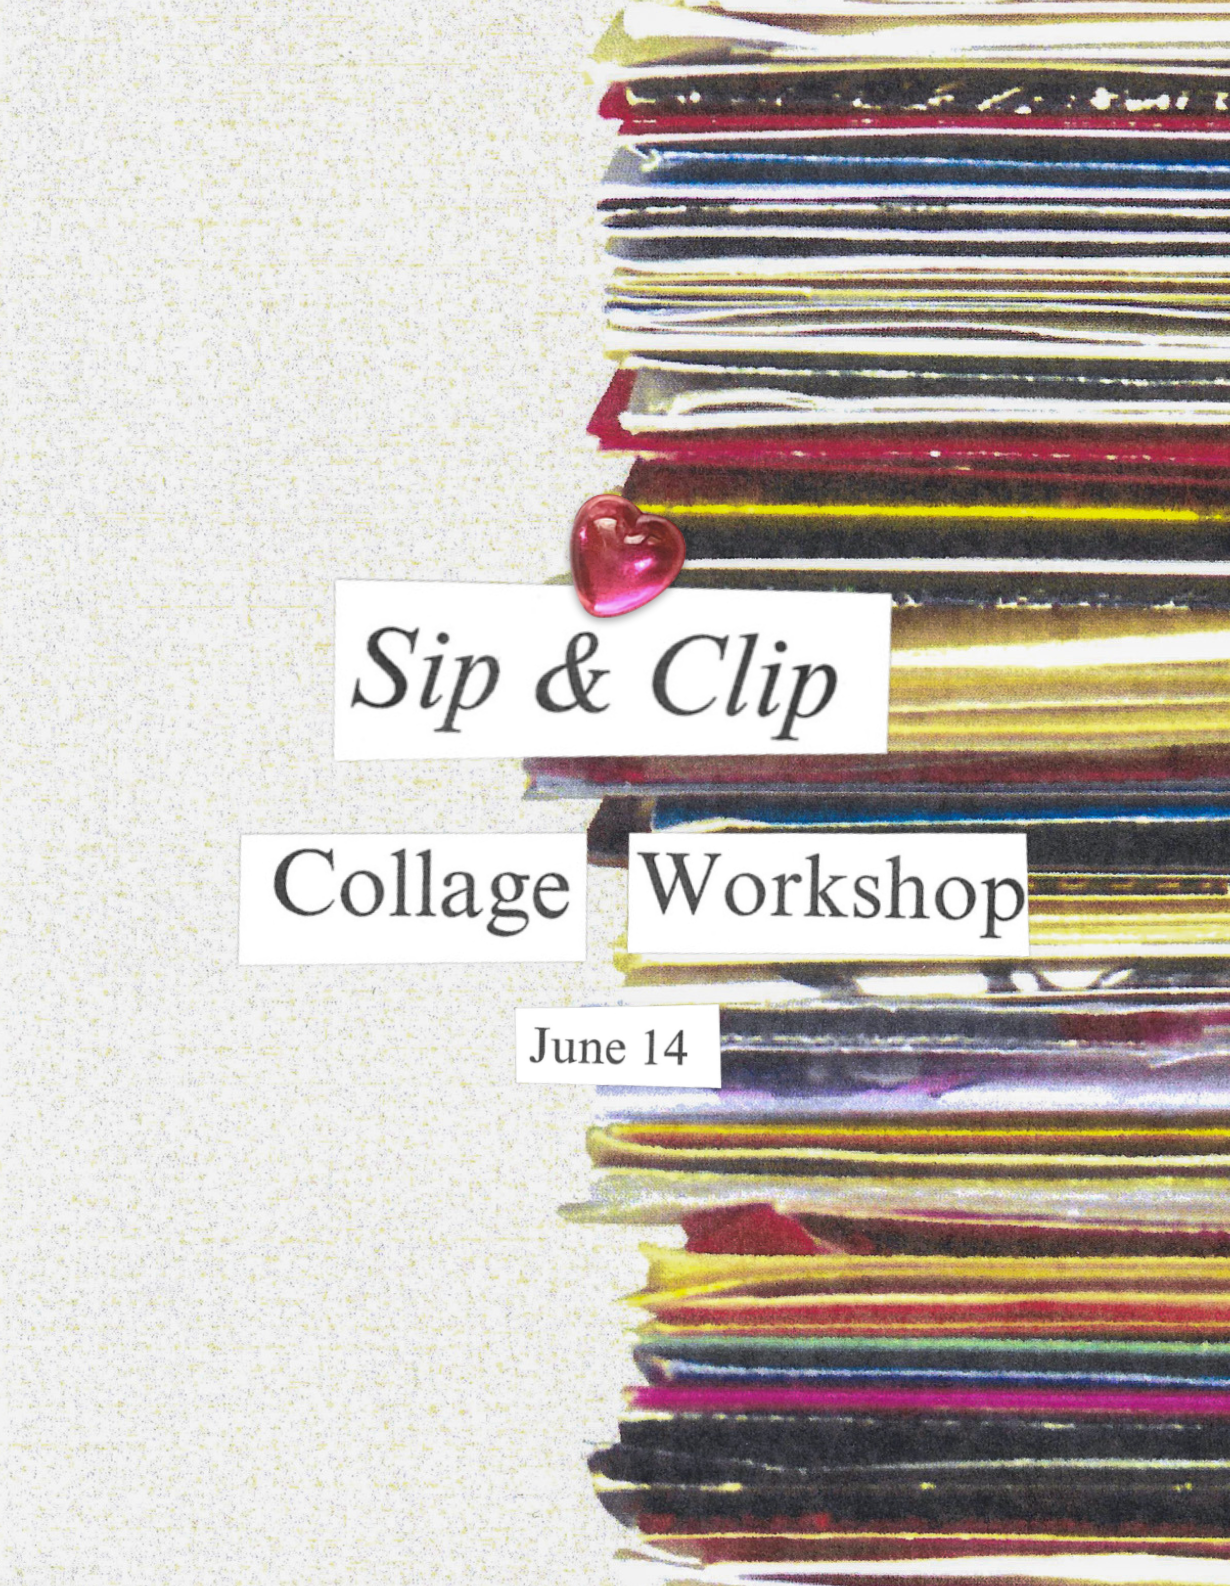 Collage Workshop - "Sip & Clip" Ticket - June 14